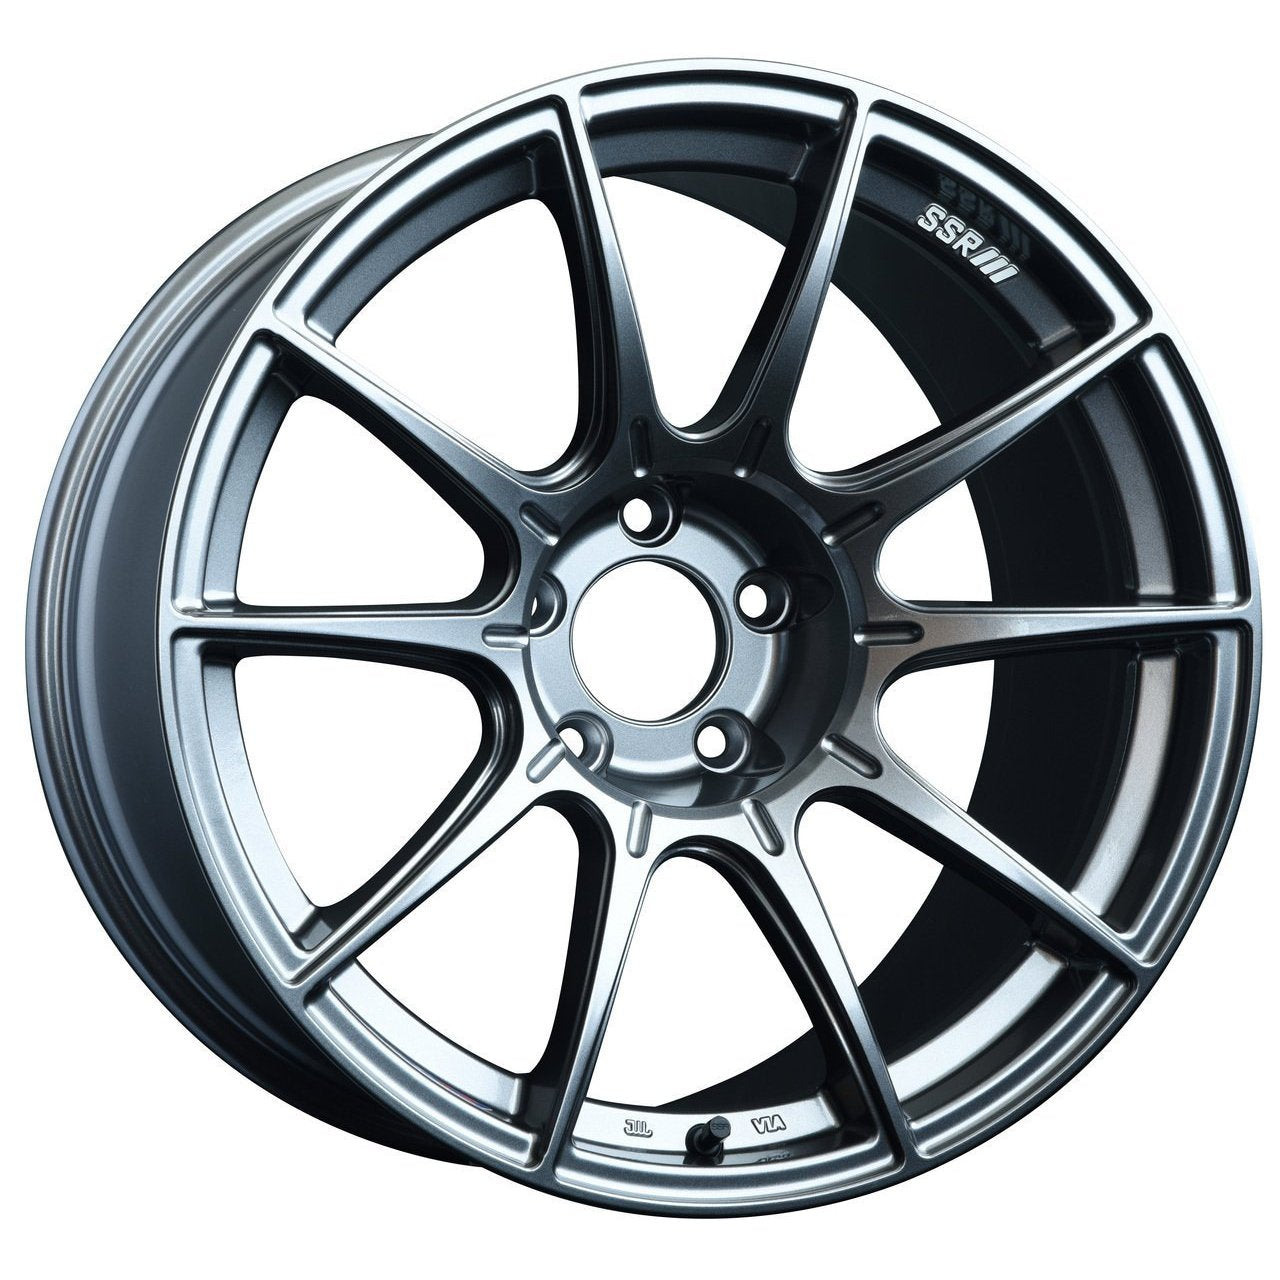 SSR GTX01 17x8 5x114.3 45mm Offset Dark Silver Wheel - Universal-XA17800+4505GDK-Wheels-SSR Wheels-JDMuscle